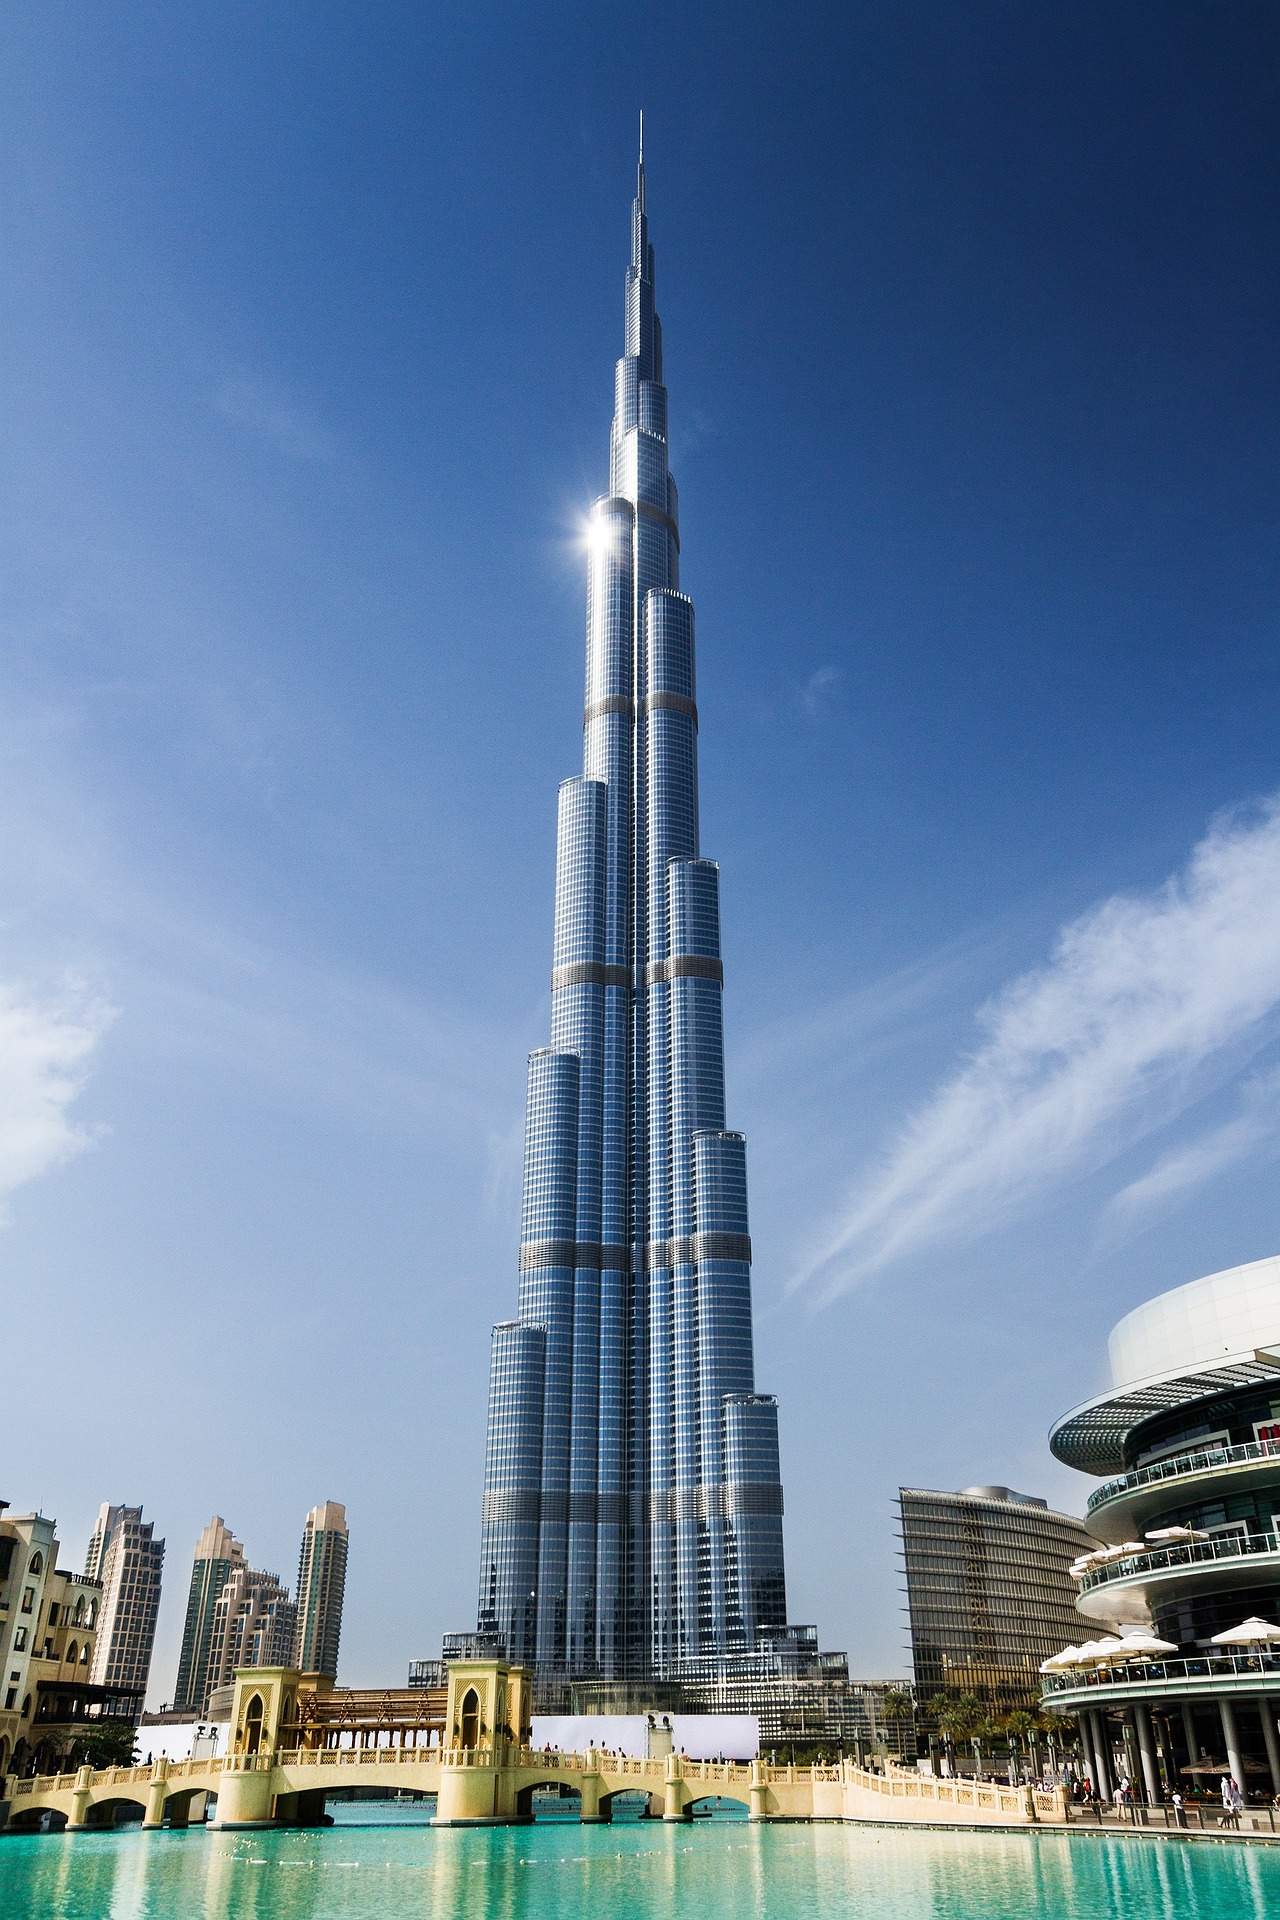 5 Fascinating Facts About the Burj Khalifa in Dubai